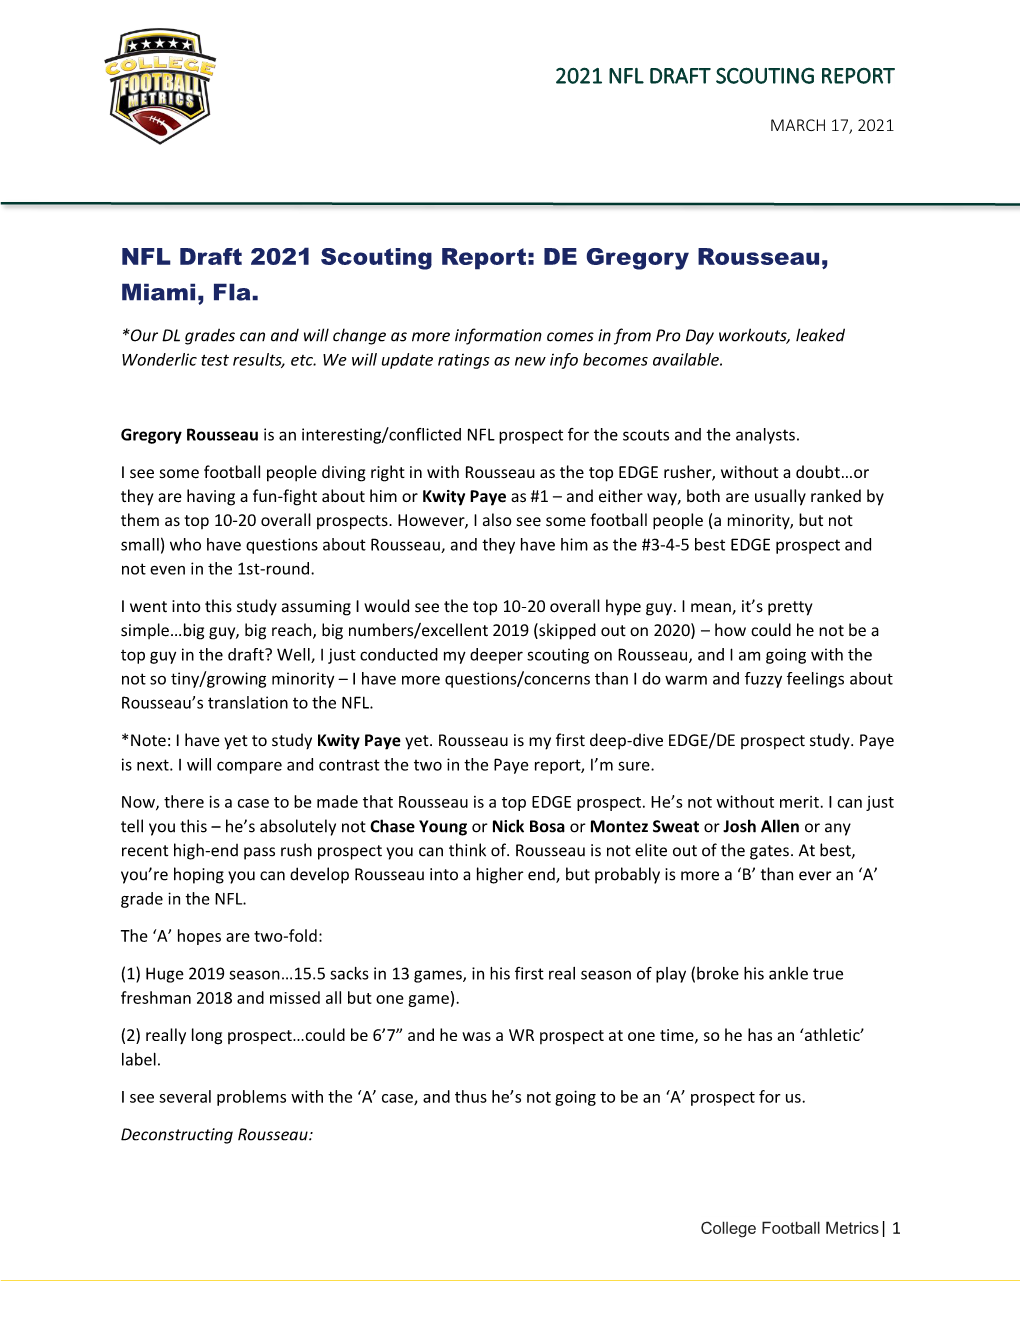 NFL Draft 2021 Scouting Report: DE Gregory Rousseau, Miami, Fla